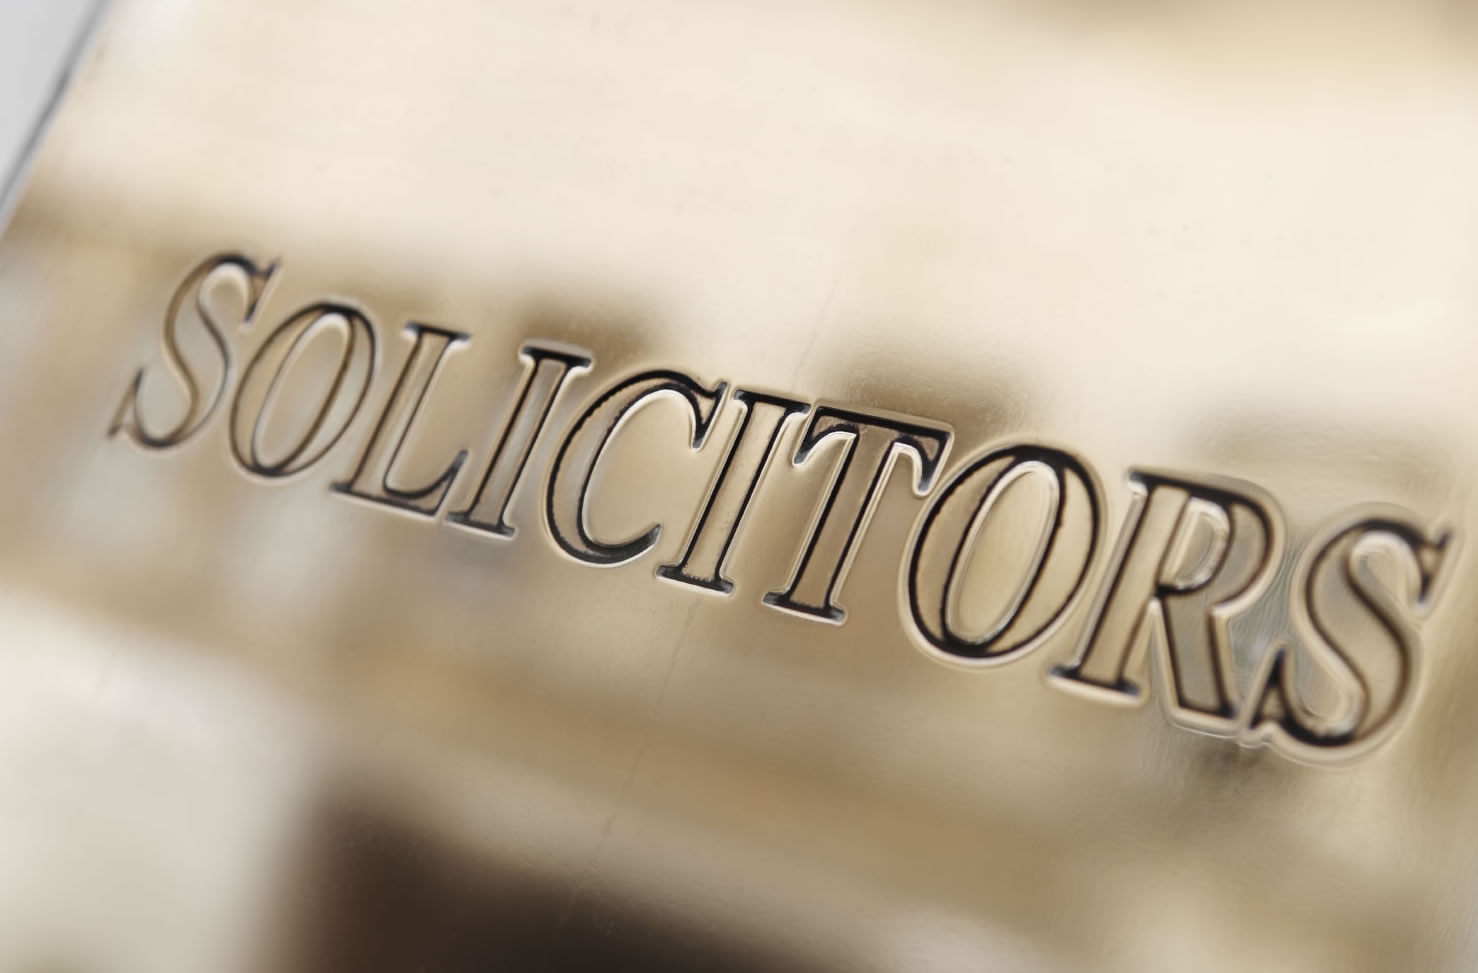 Solicitor fined £5k for sending ‘disturbing’ internal emails